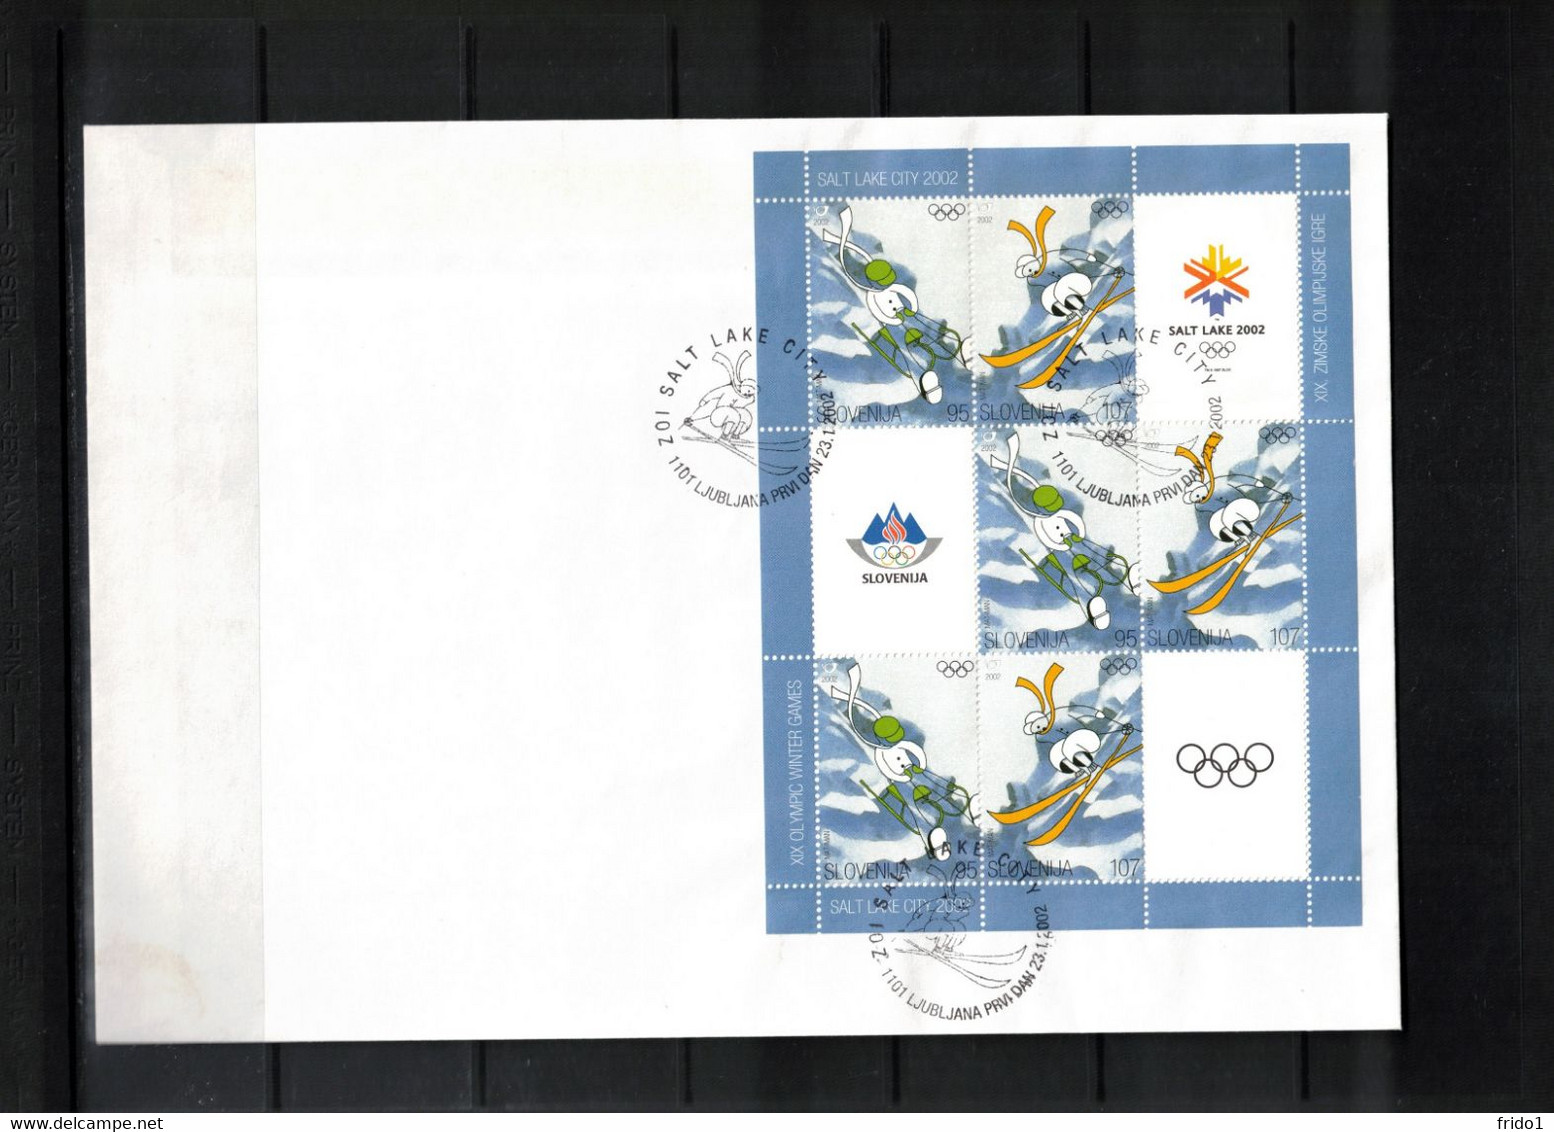 Slowenien / Slovenia 2002 Olympic Games Salt Lake City Complete Sheet FDC - Hiver 2002: Salt Lake City